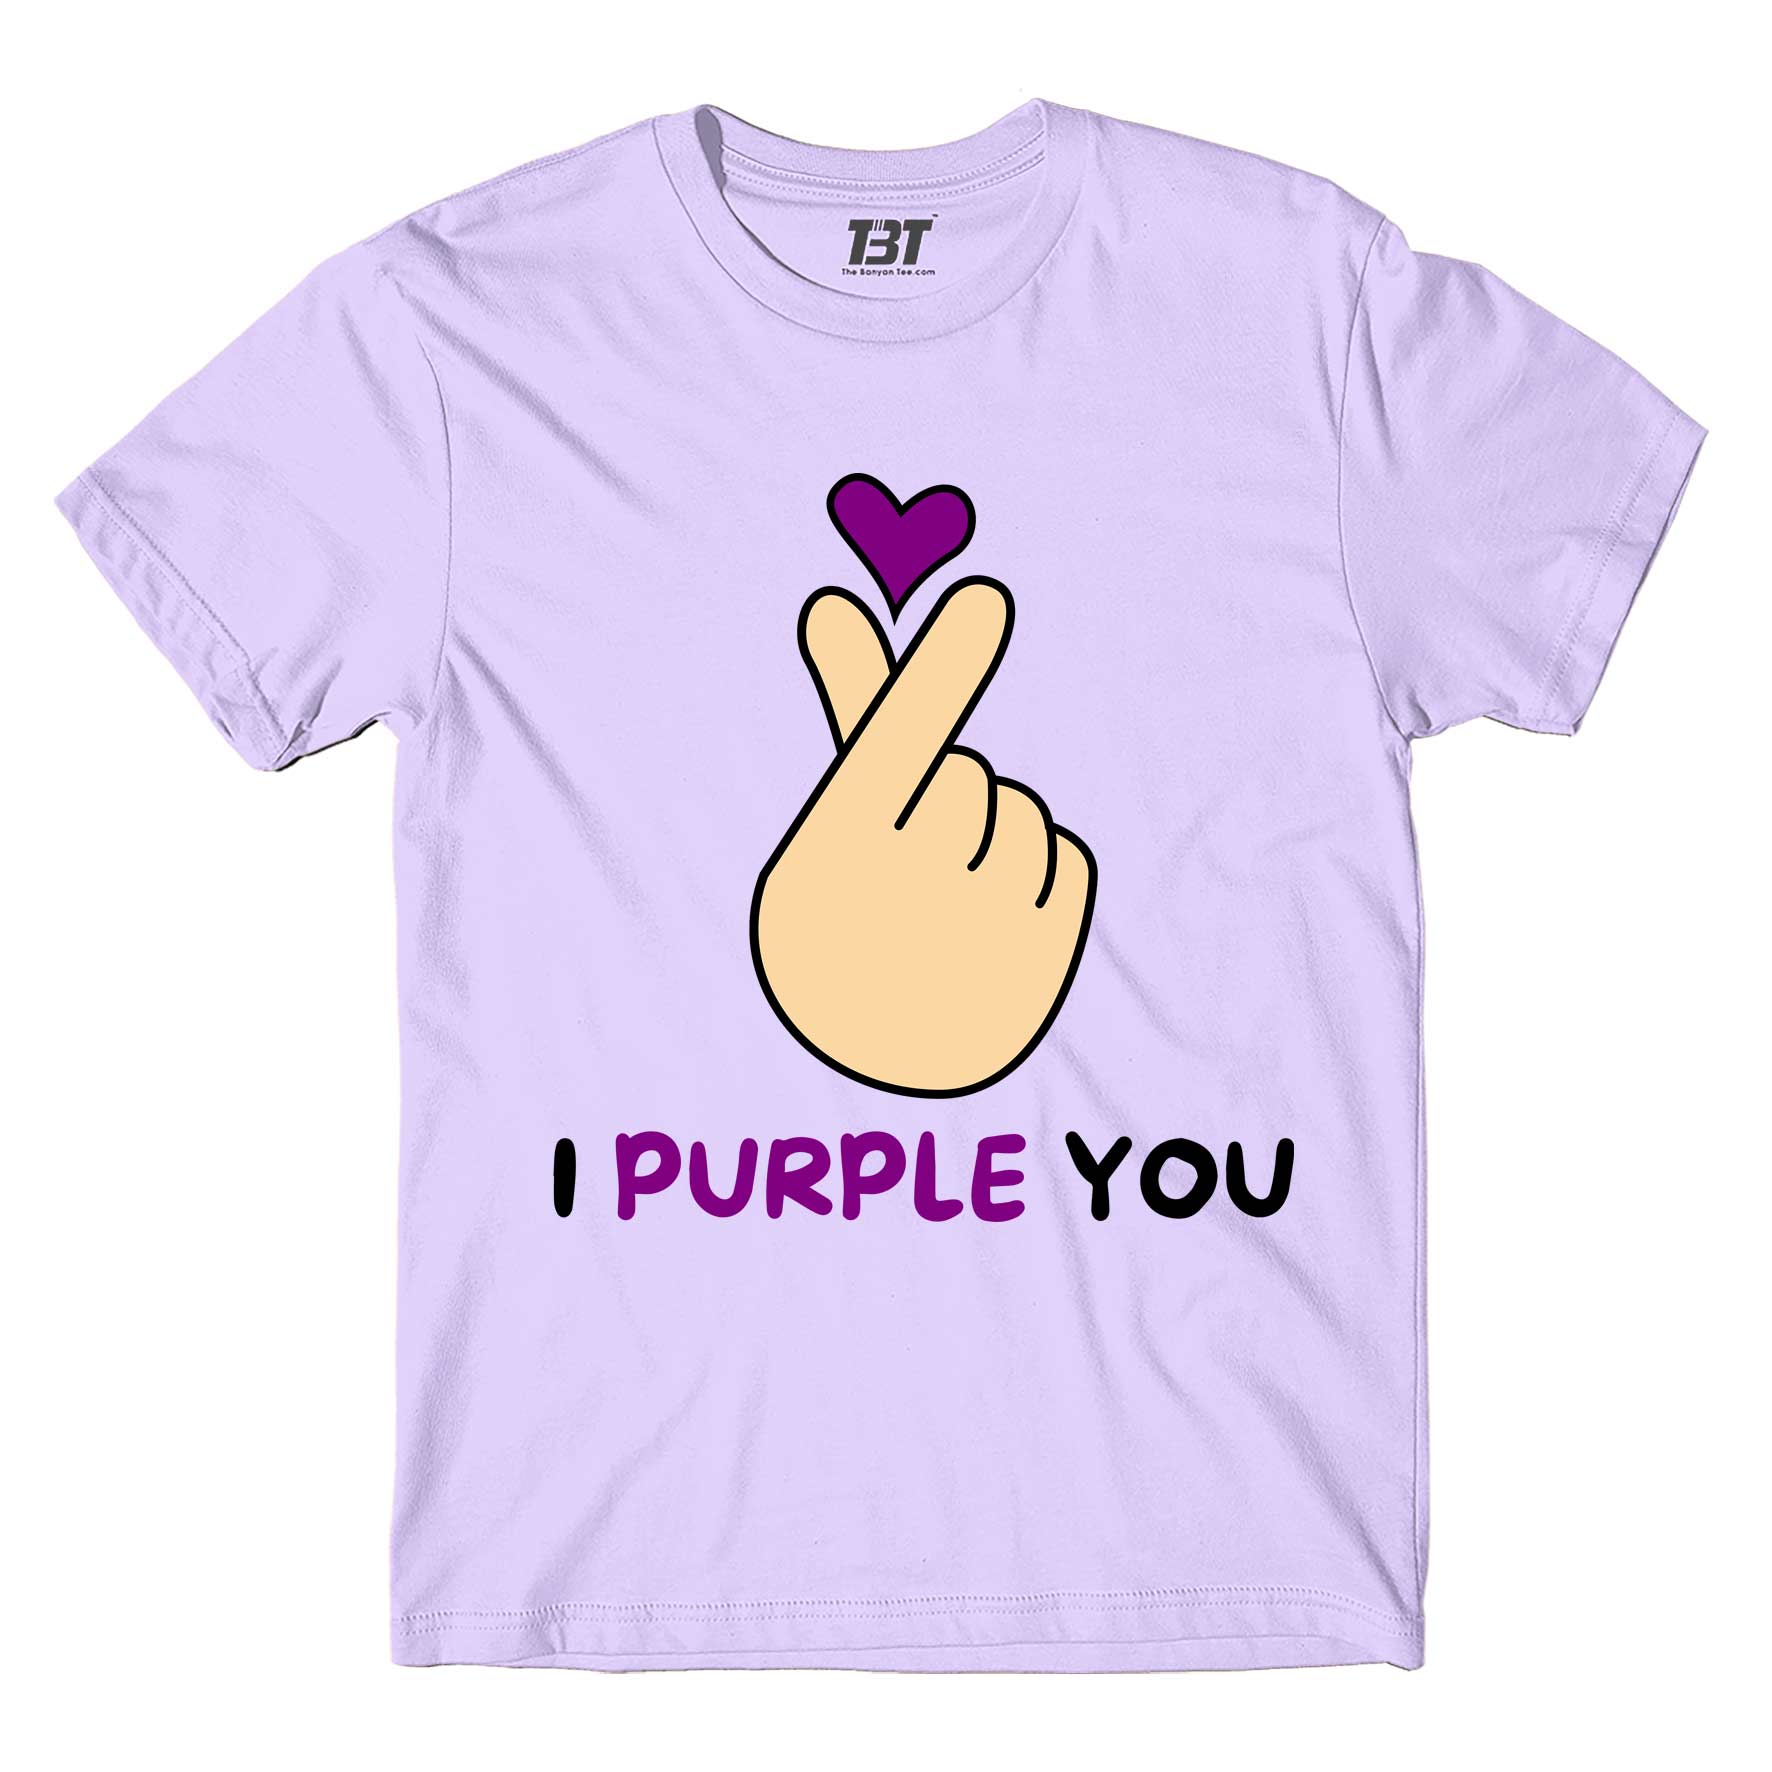 bts i purple you t-shirt music band buy online india the banyan tee tbt men women girls boys unisex lavender 